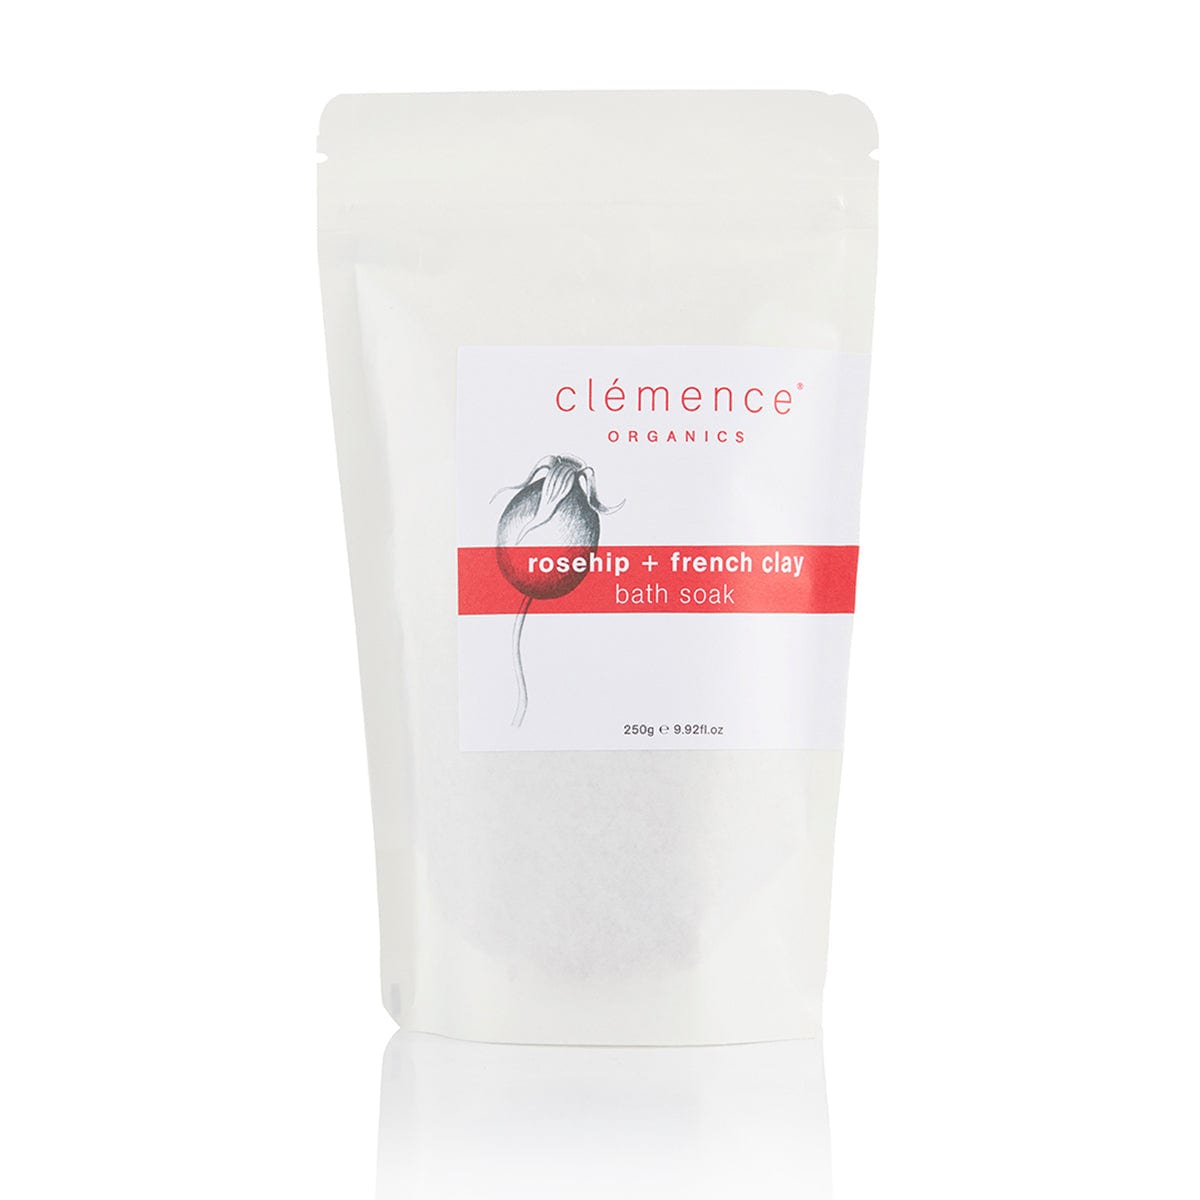 Clemence Organics Rosehip + French Clay Bath Soak 250g